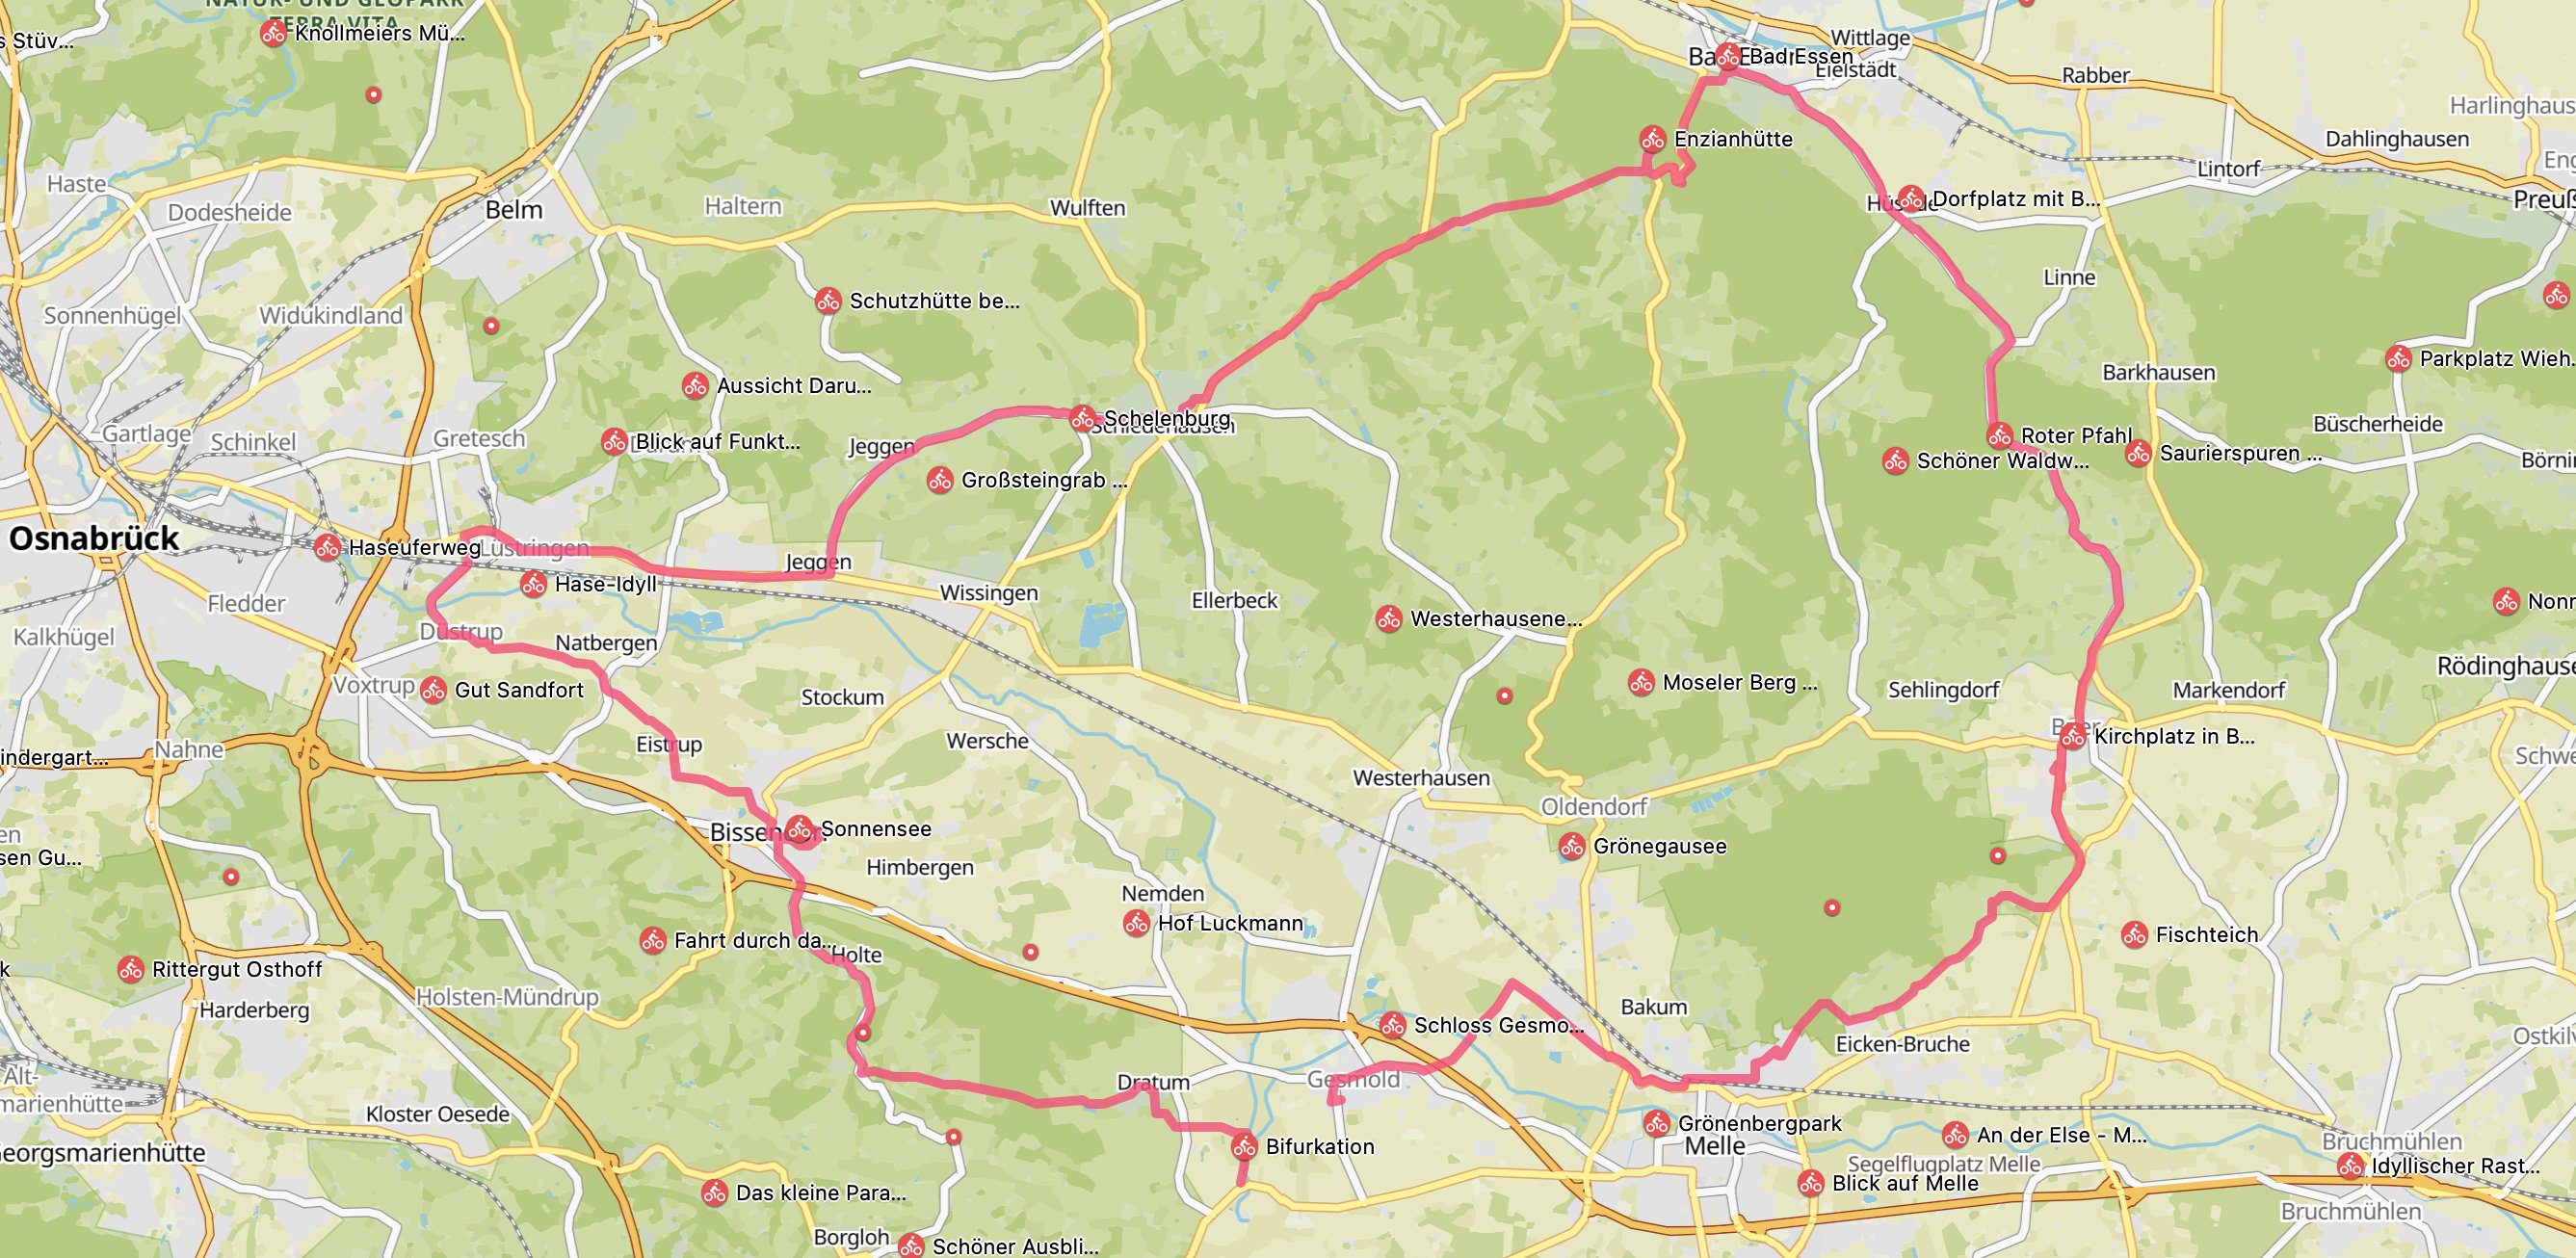 Karte_Rennrad_Route_web